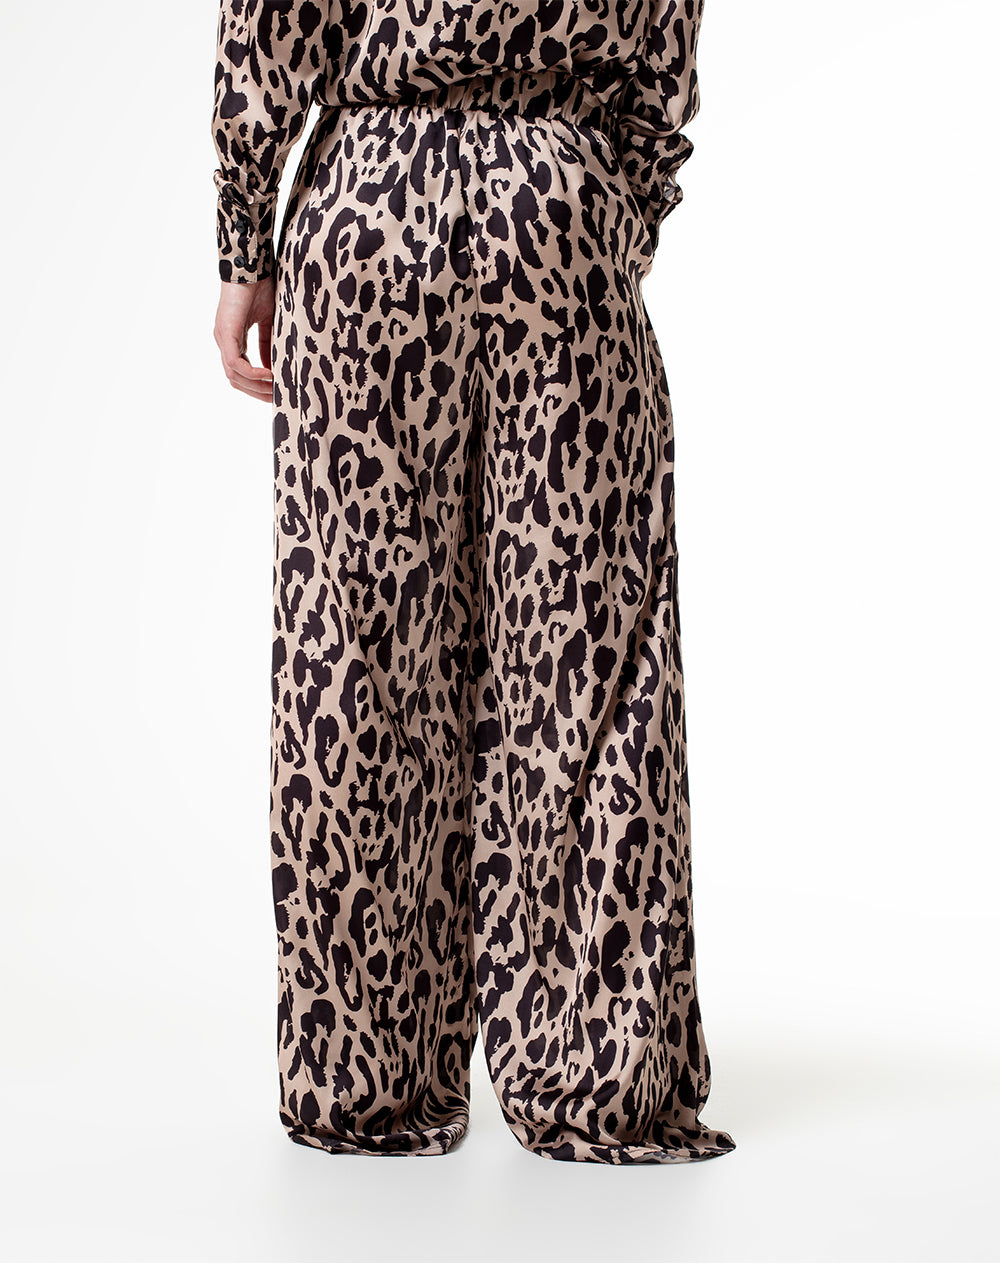 Pantalón loose fit tiro alto negro leopardo